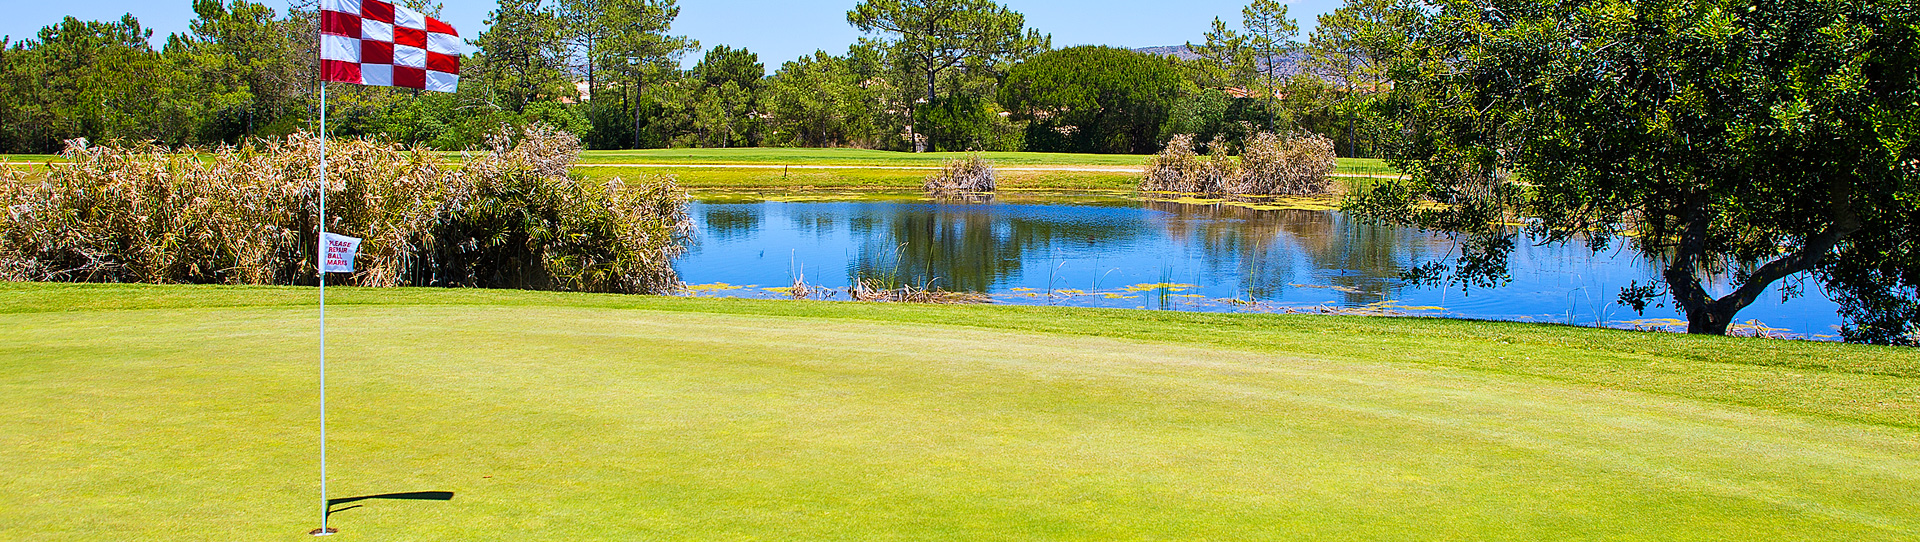 Portugal golf courses - Vila Sol Golf Course - Photo 3